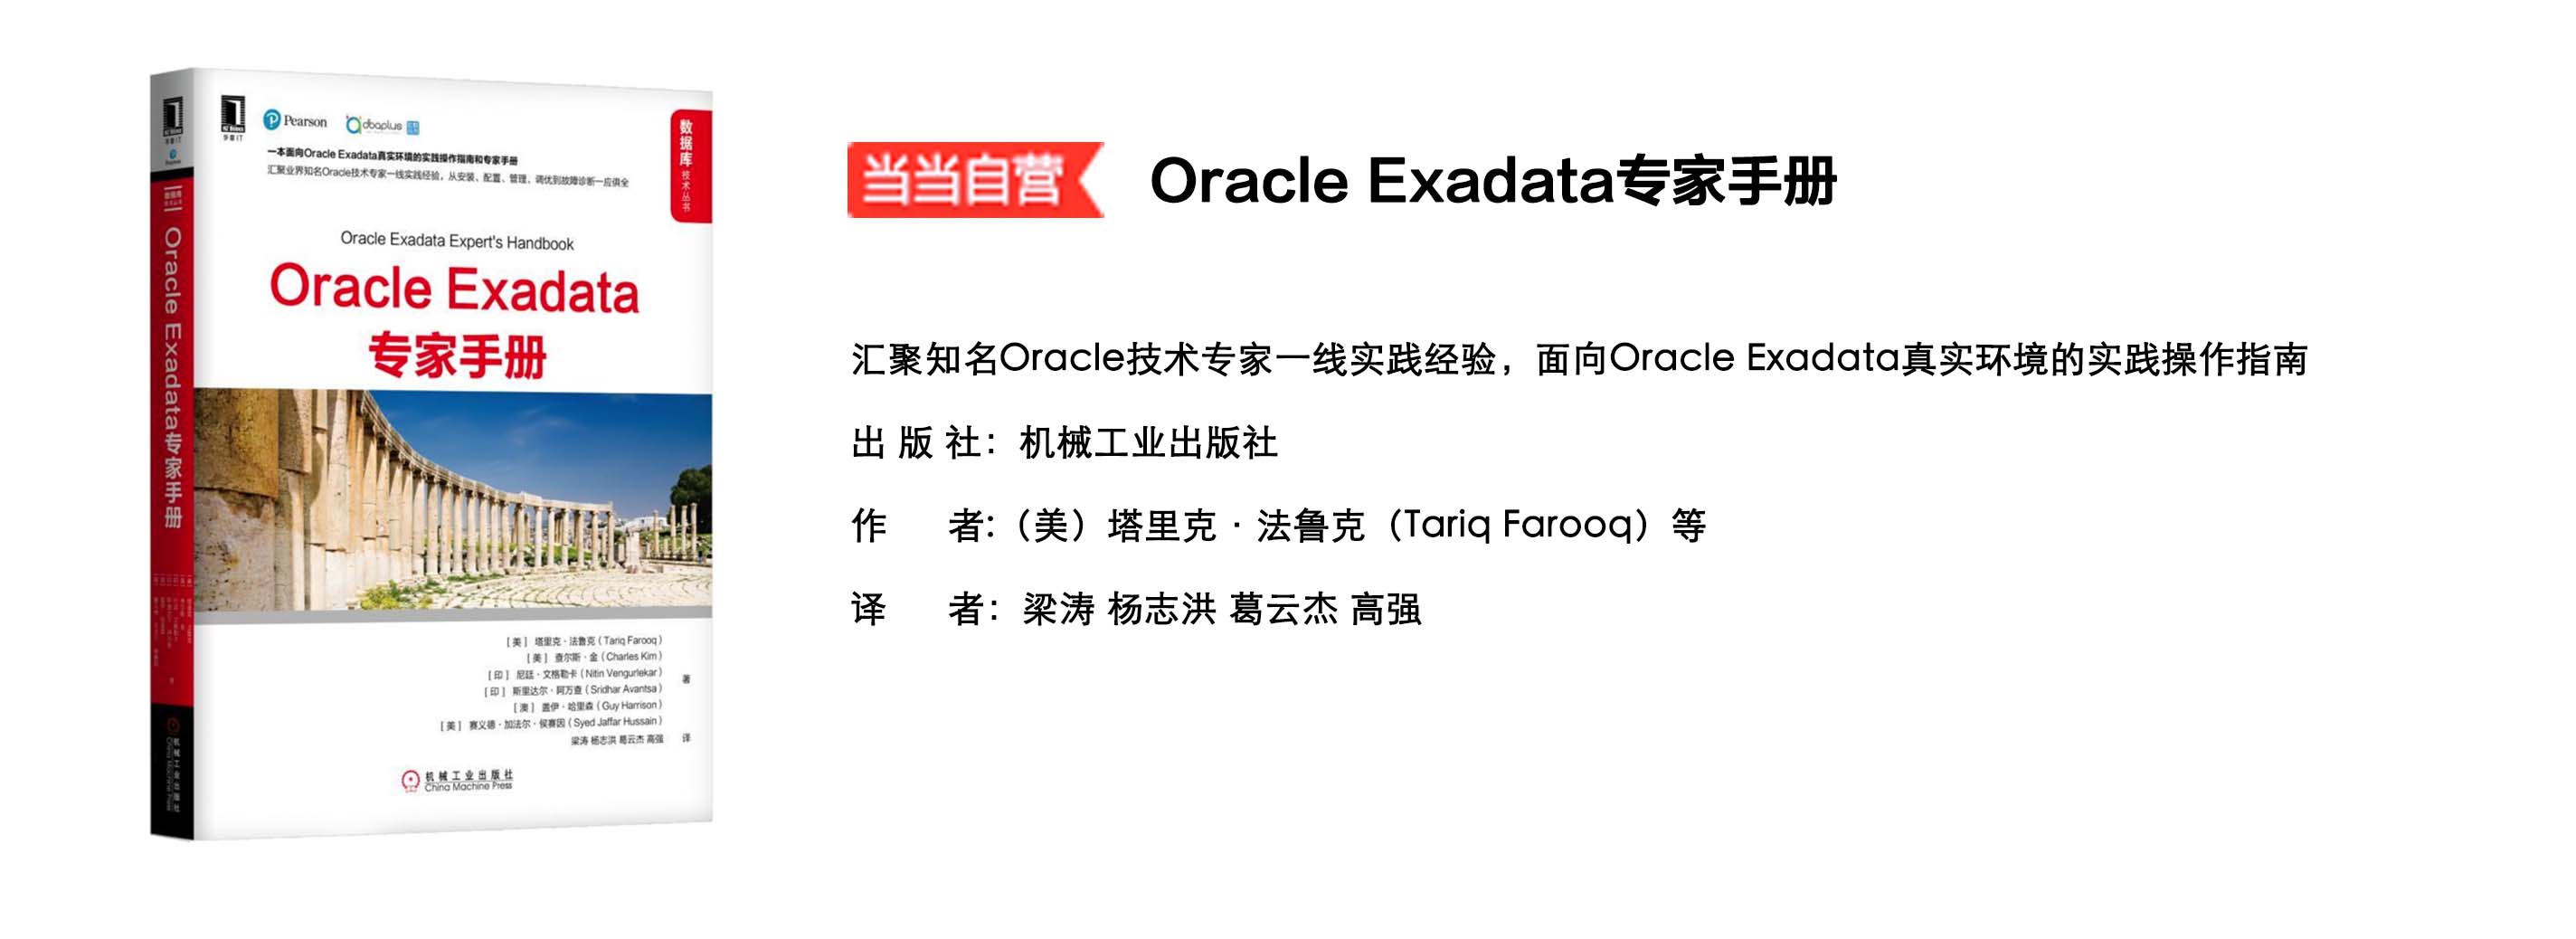 《Oracle Exadata 专家手册》：汇聚知名Oracle技术专家一线实践经验，面向Oracle Exadata真实环境的实践操作指南<br/>ISBN：9787111607366<br/>
丛书名：数据库技术丛书<br/>
定价：119.00<br/>
作者：[美]塔里克·法鲁克<br/>
作者国别：美国<br/>
出版时间：201809<br/>
发货状态：已发货<br/>
出 版 社：机械工业出版社<br/>
图书公司：北京华章图文信息有限公司<br/>
译者：梁涛,杨志洪,葛云杰,高强<br/>
开本：16开<br/>
装帧：平装<br/>
版次：1版1次<br/>
页数：400页<br/>
开卷分类：科技>计算机> 数据库